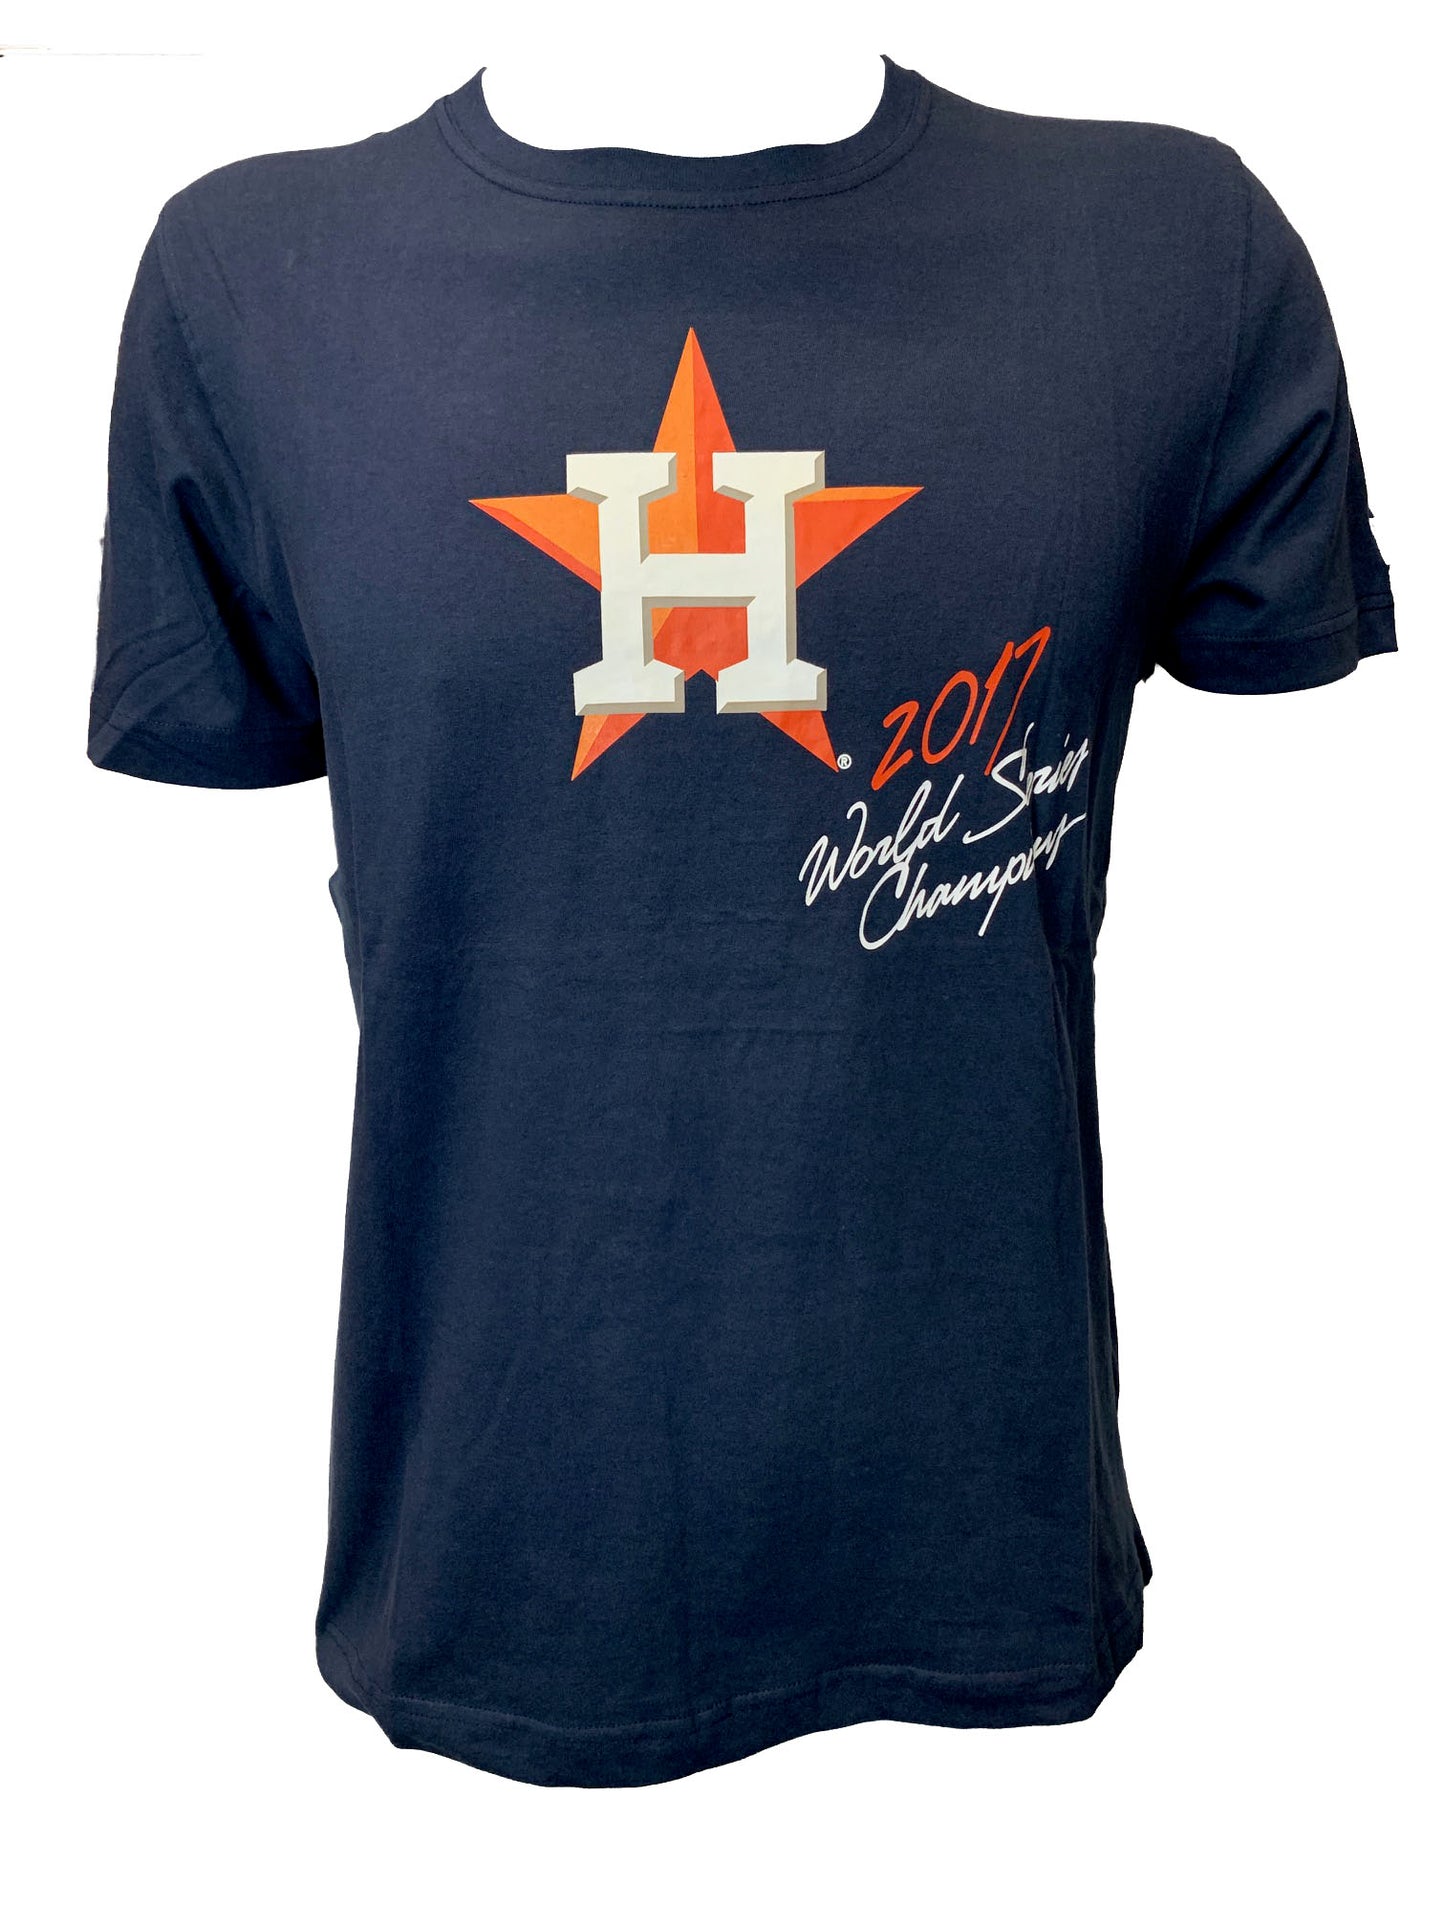 houston astros world series tee shirts